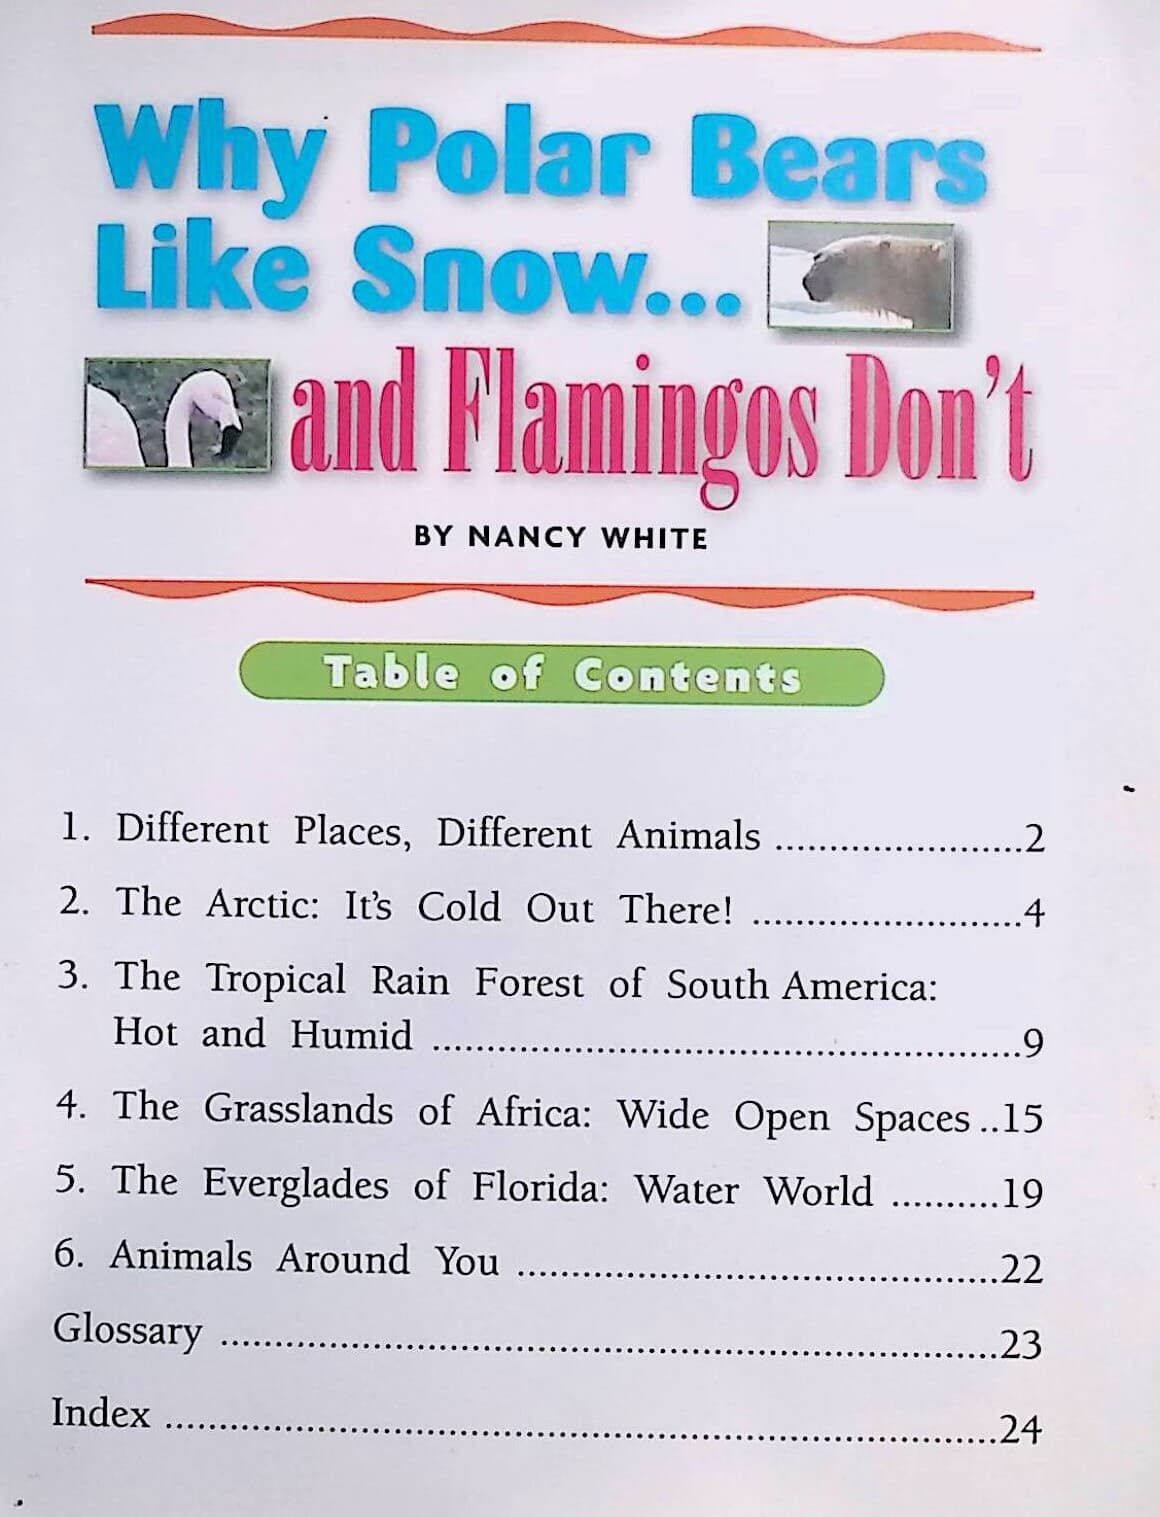 Why Polar bears like snow: And flamingos don't (Navigators science series) Paperback